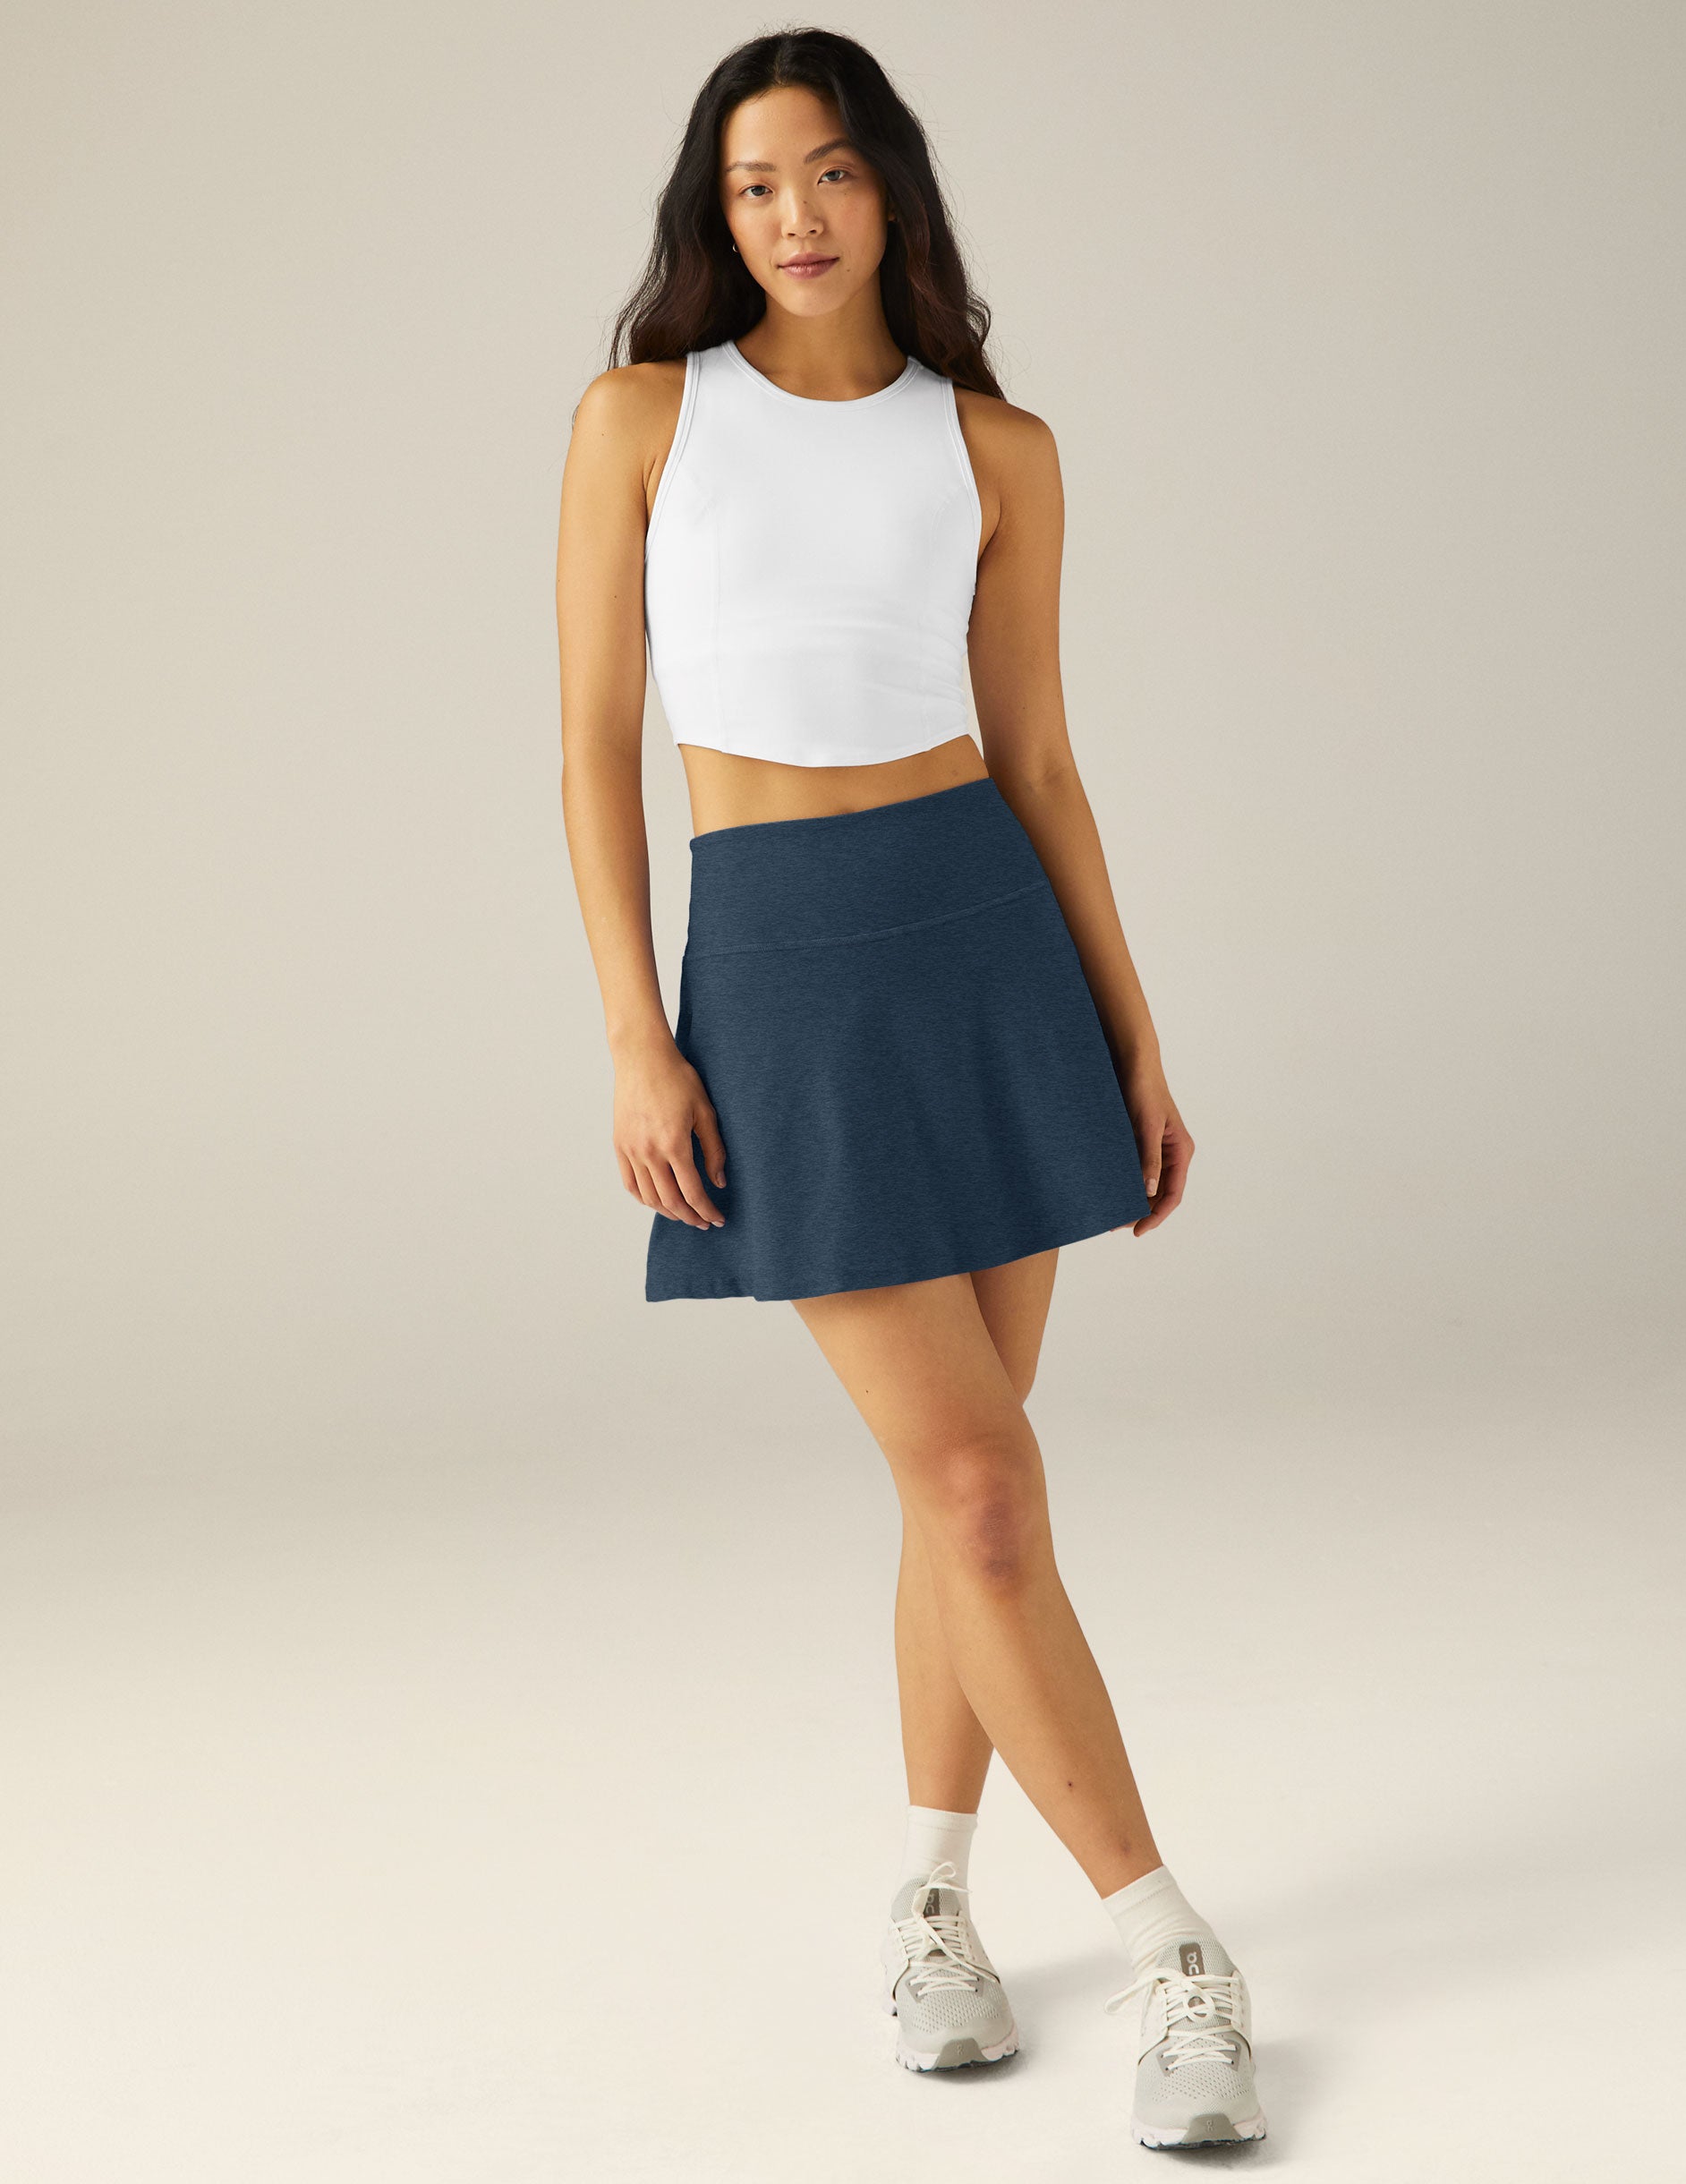 Lululemon Pace Rival Skirt Cyprus, Size 10 Regular